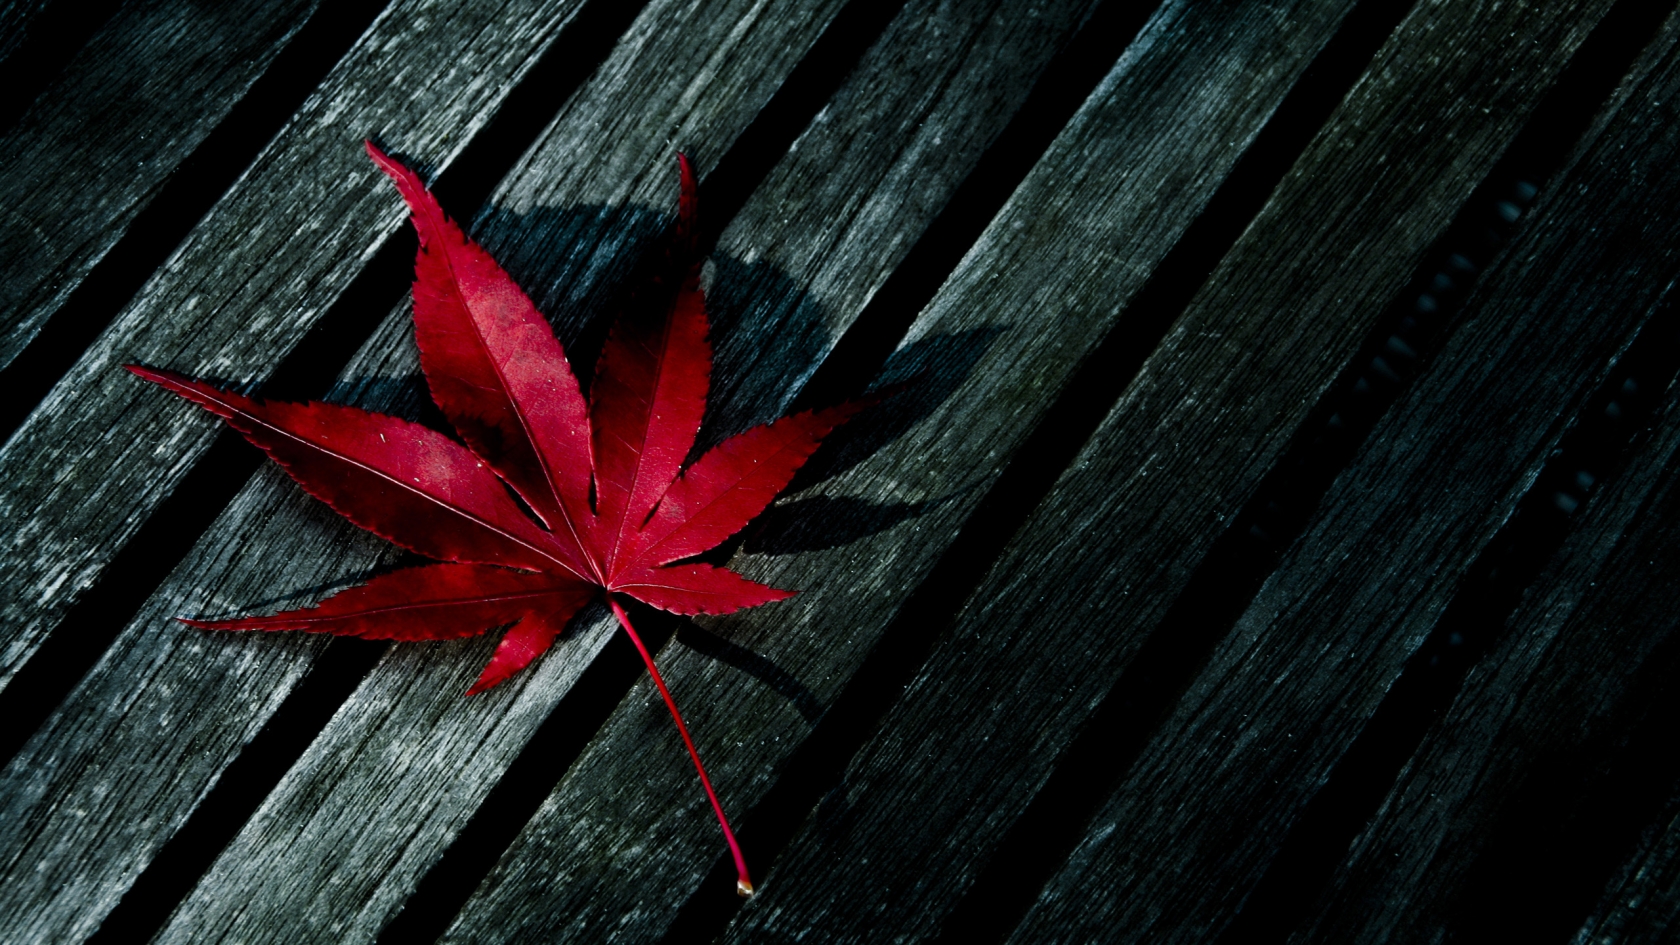 Red Fallen Leaf for 1680 x 945 HDTV resolution